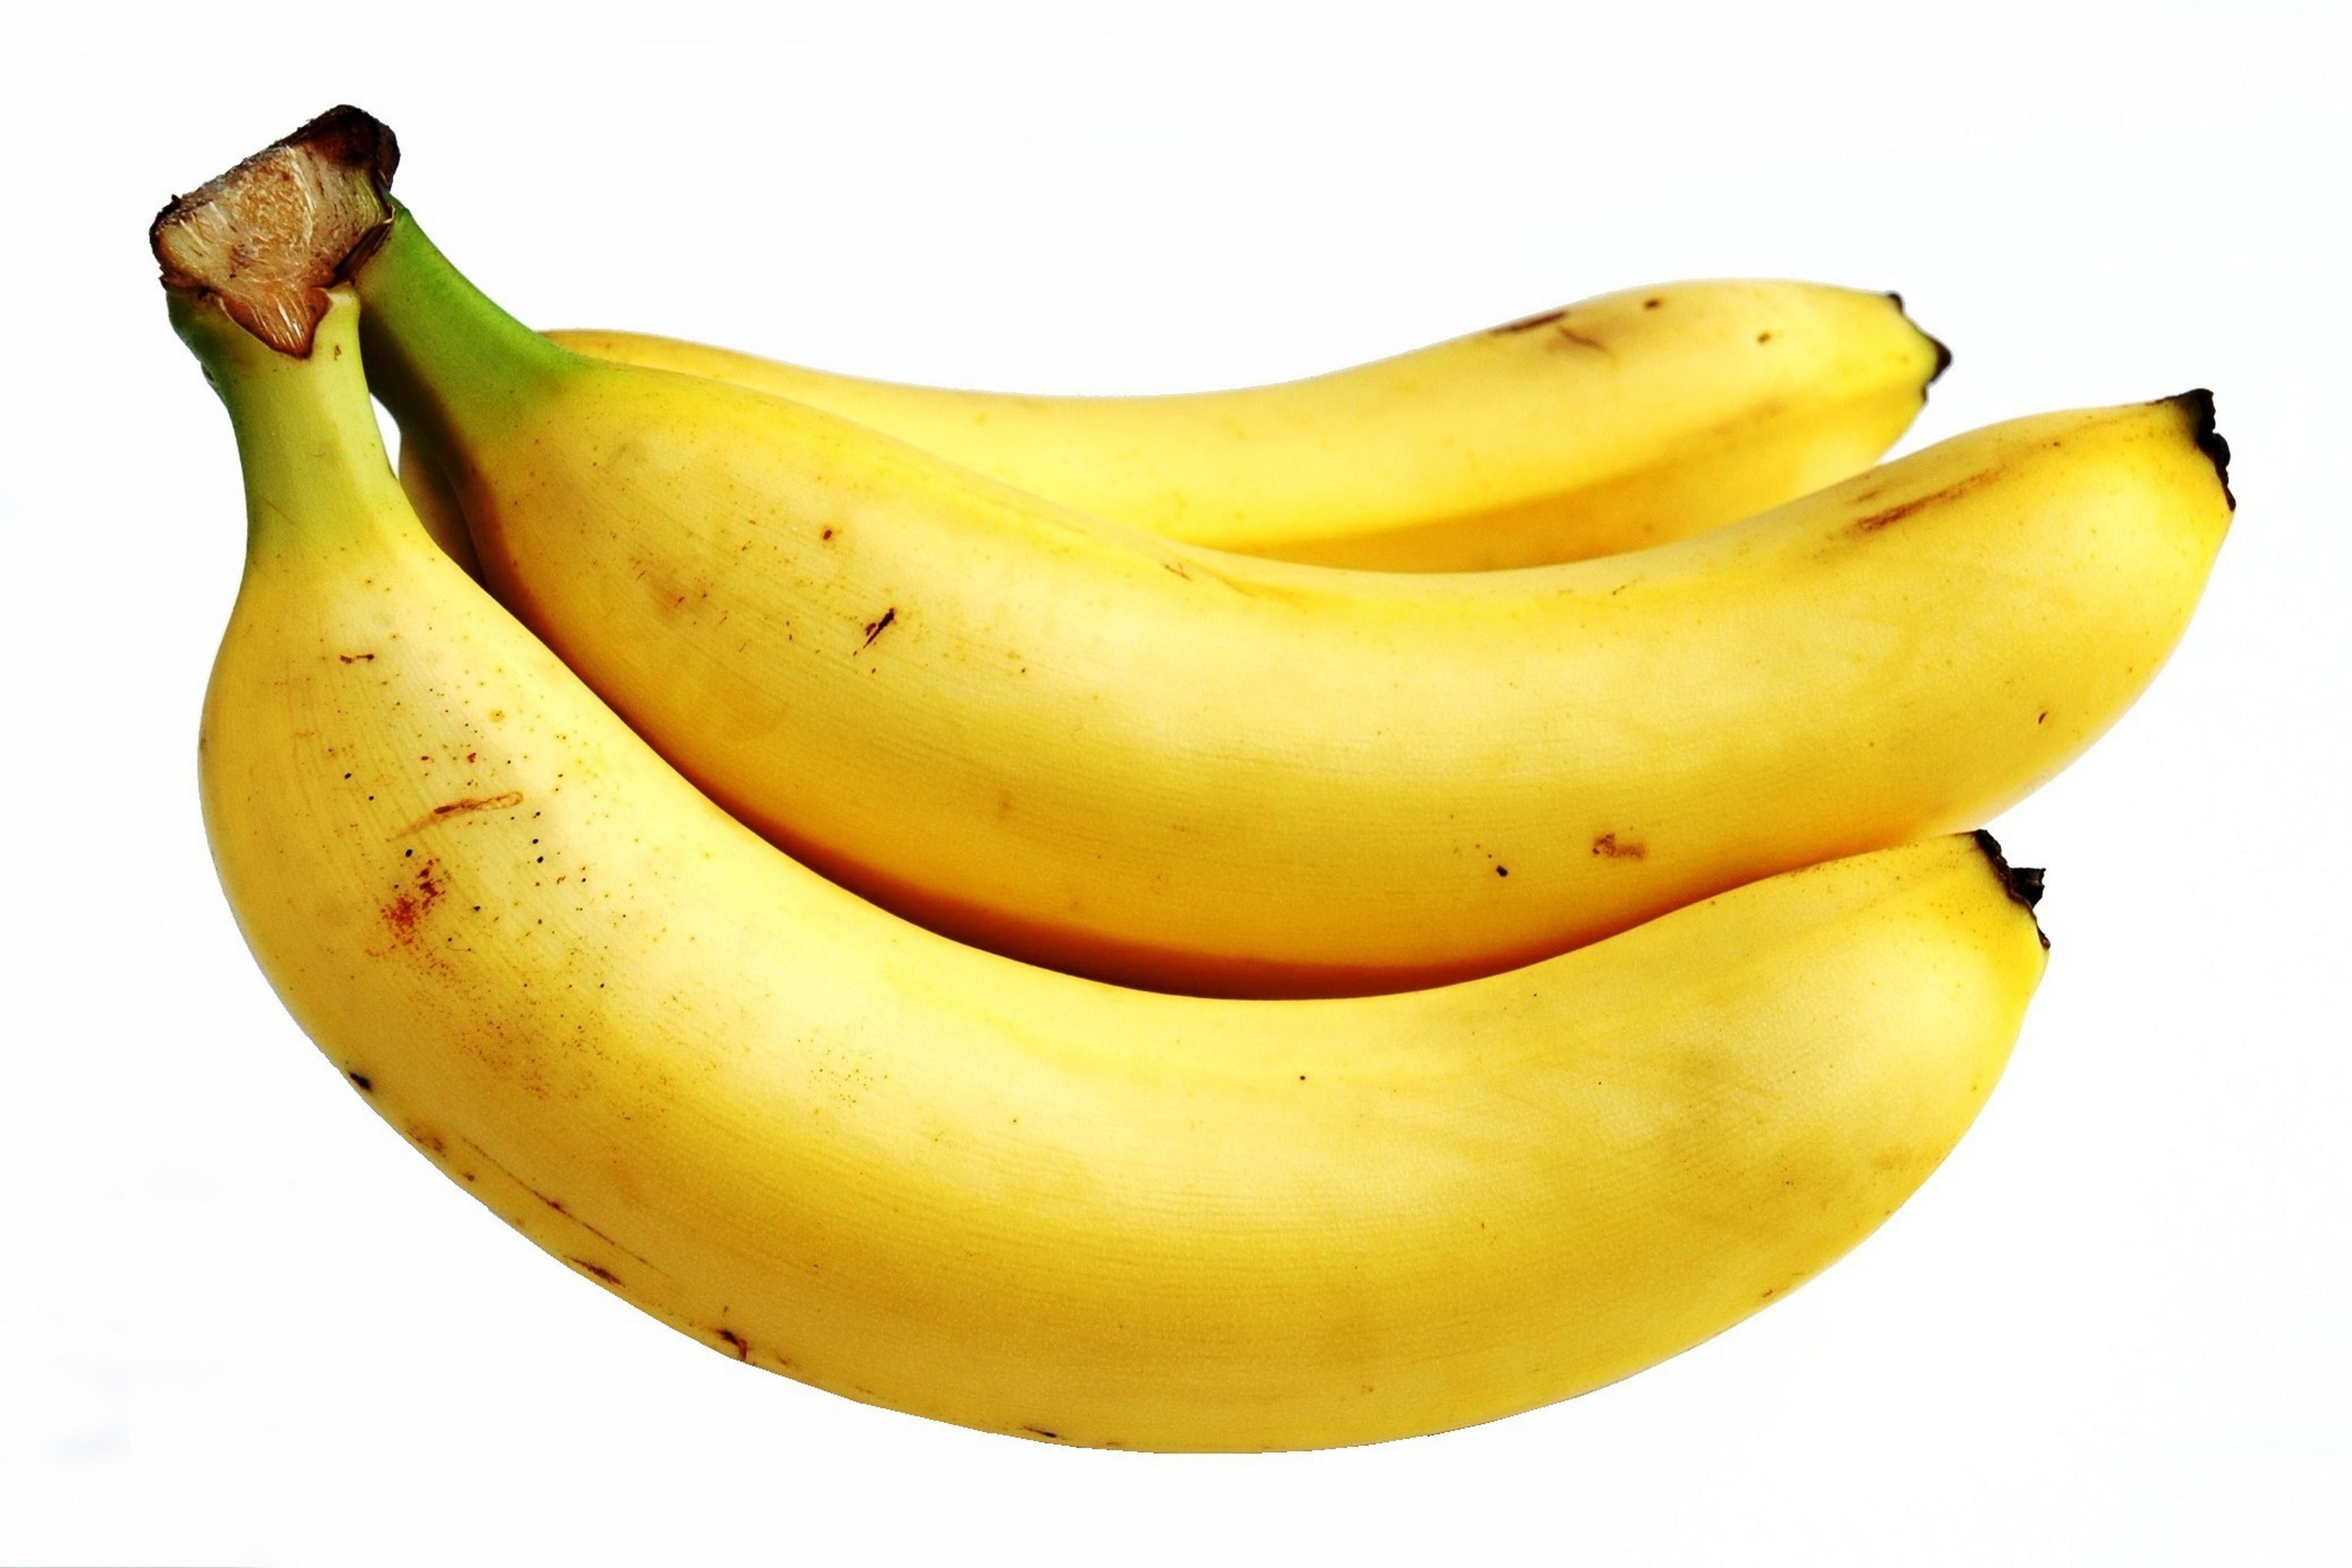 Бананово фруктовый. Банан на белом фоне. Банан на прозрачном фоне. Фрукты на белом фоне. Банан картинка на прозрачном фоне.